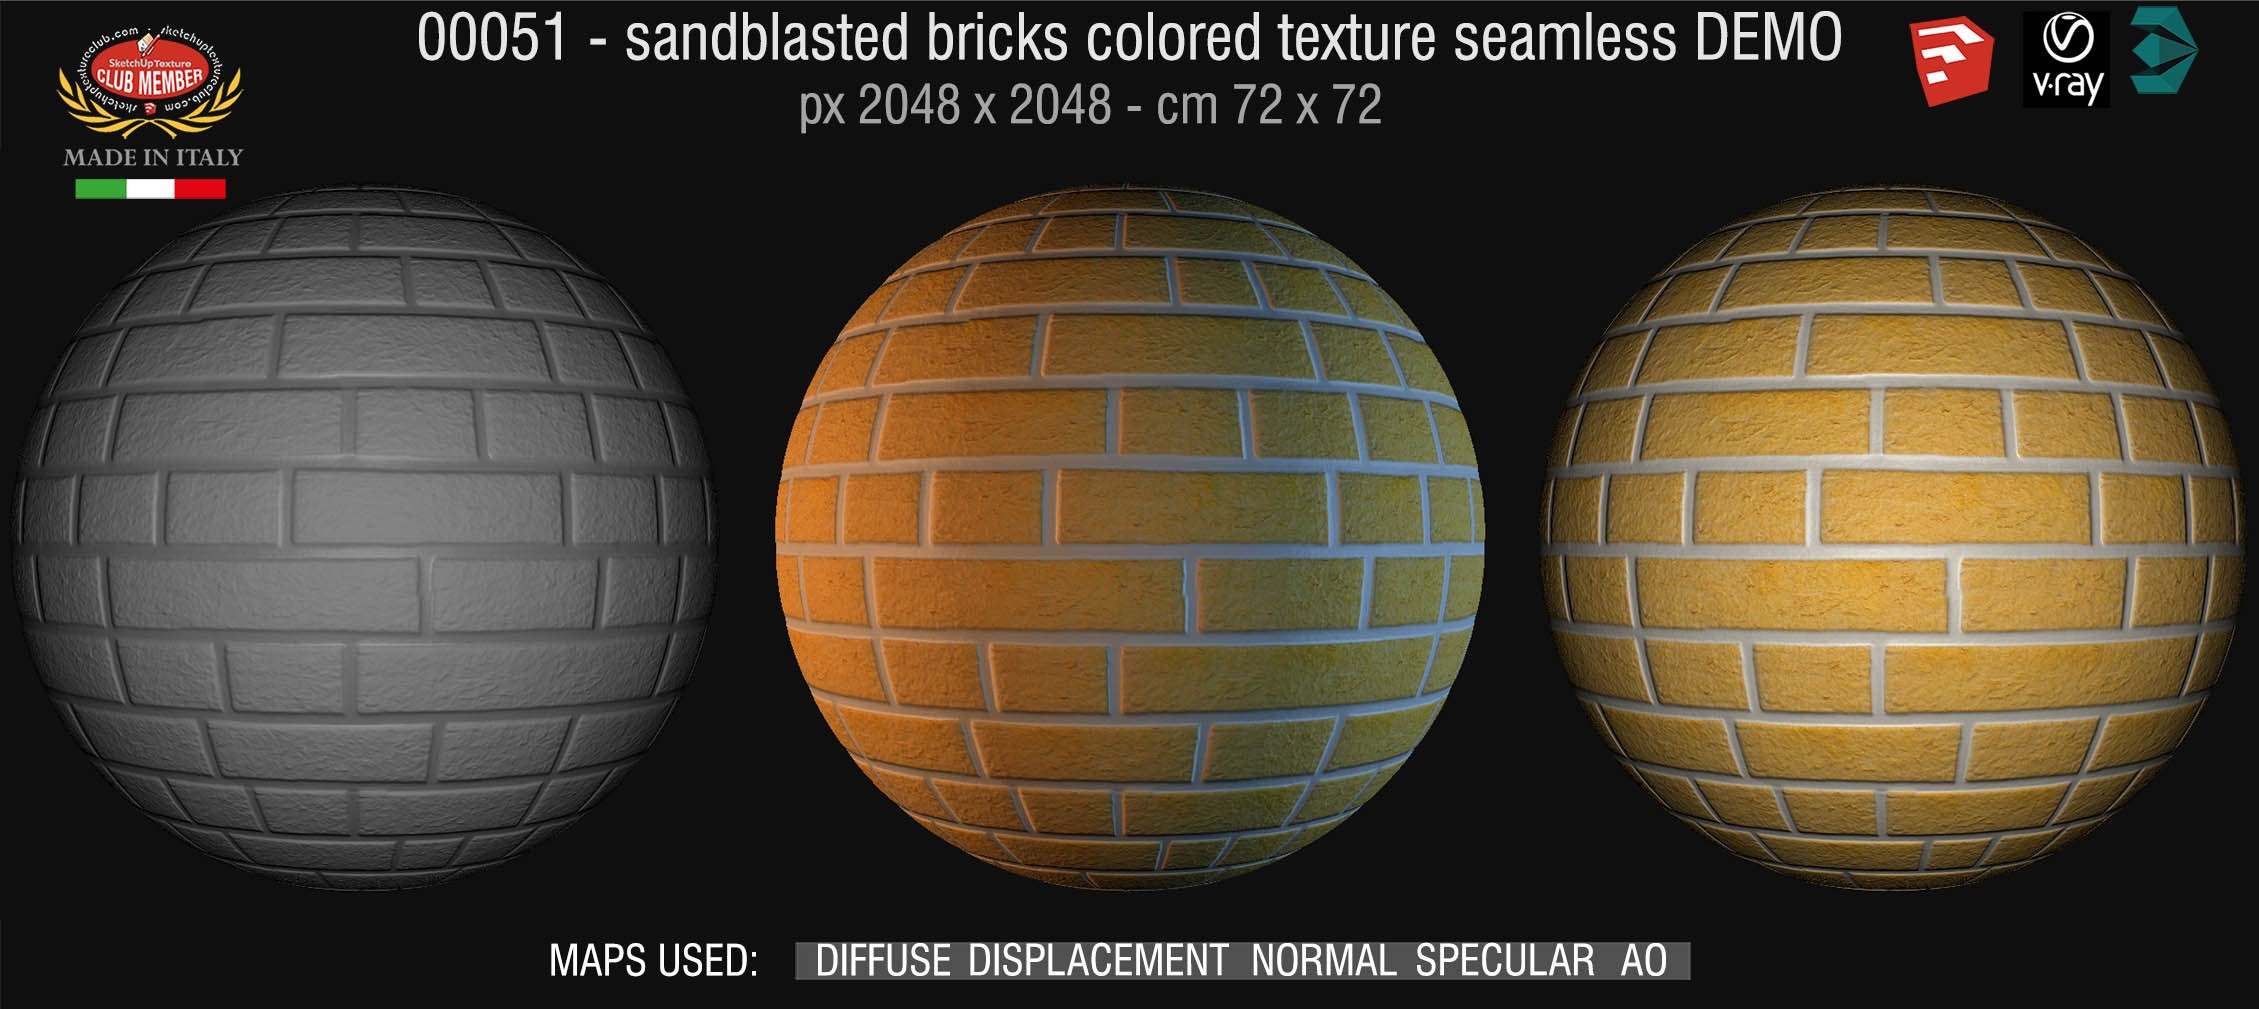 00051 Sandblasted bricks colored texture seamless + maps DEMO